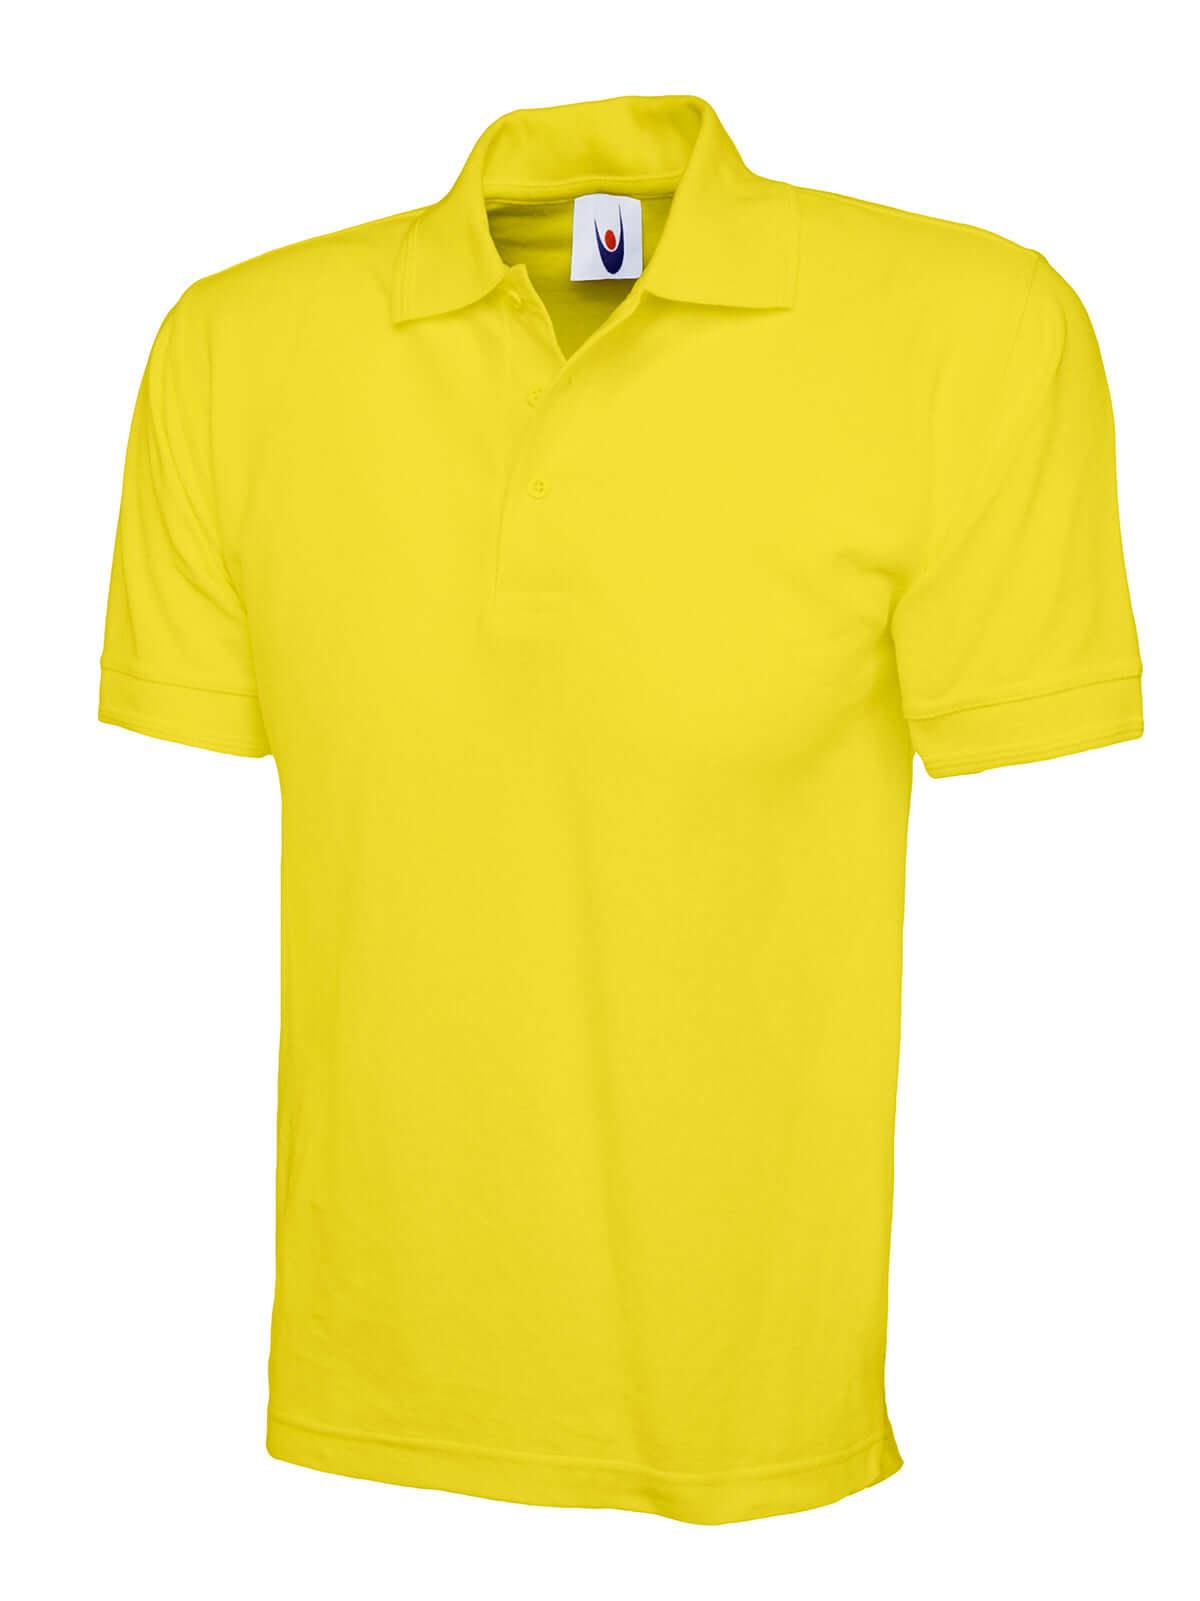 Pegasus Uniform Premium Unisex Polo Shirt - Yellow